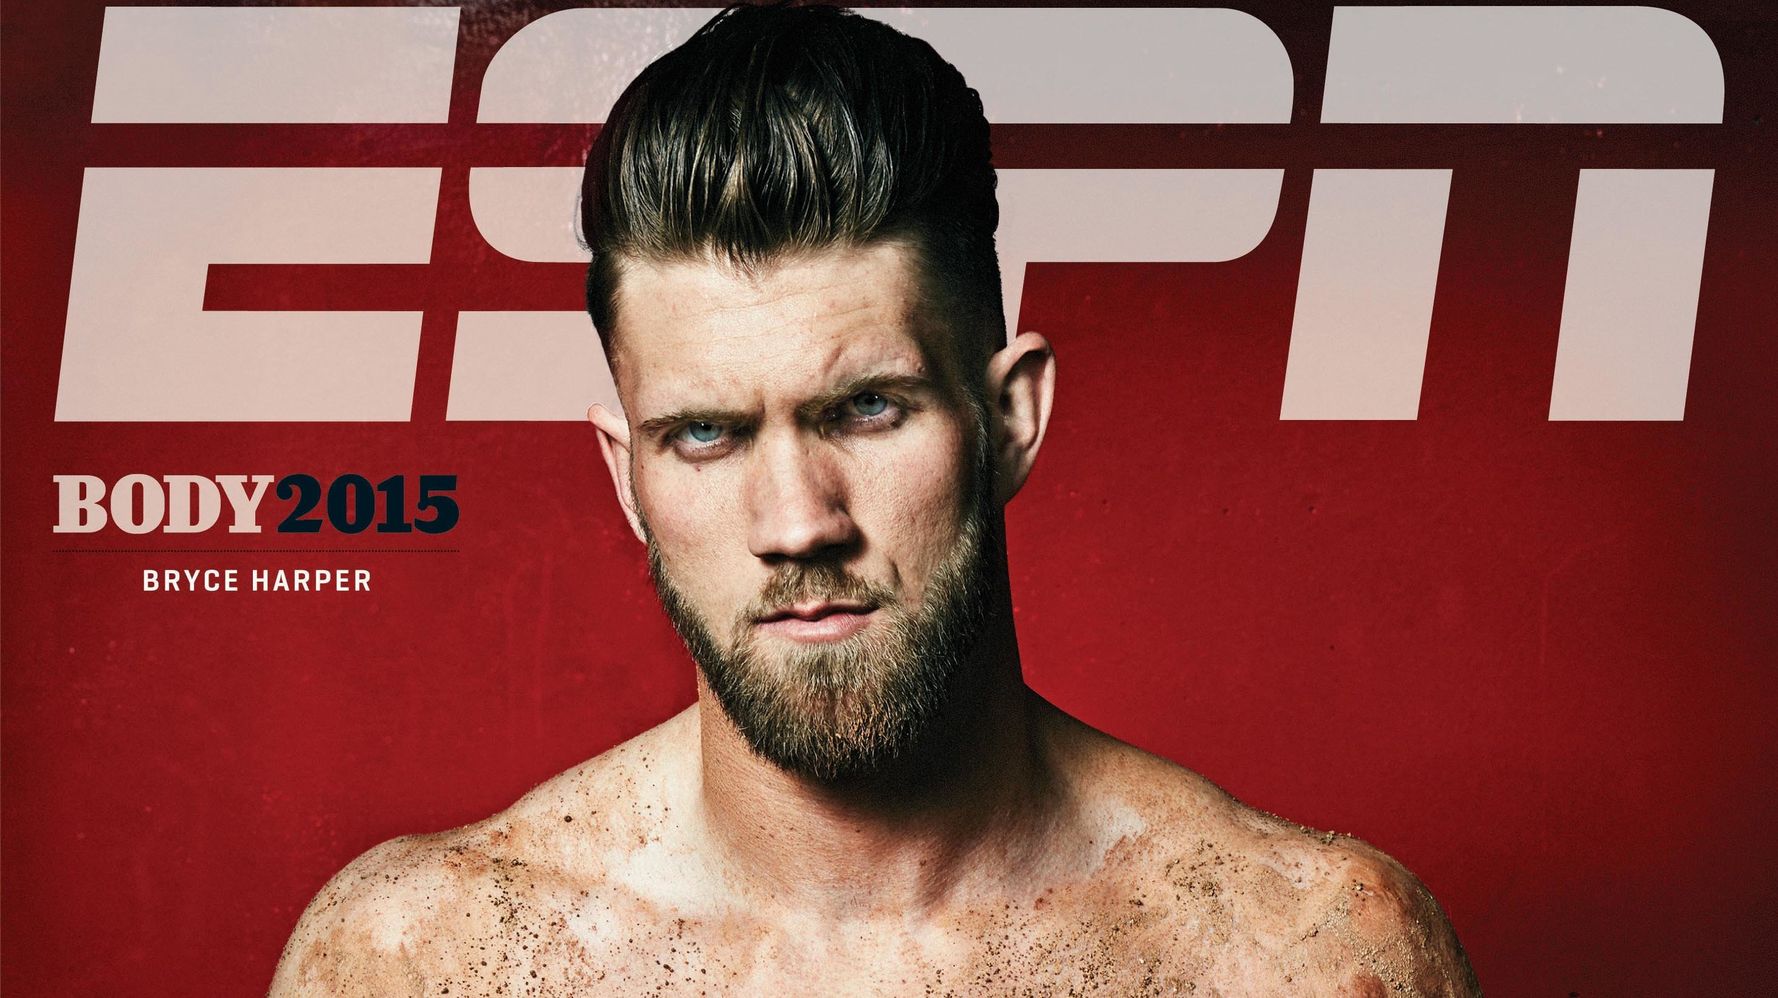 Bryce Harper's Extreme Regimen For ESPN's Body Issue Shows Body I...